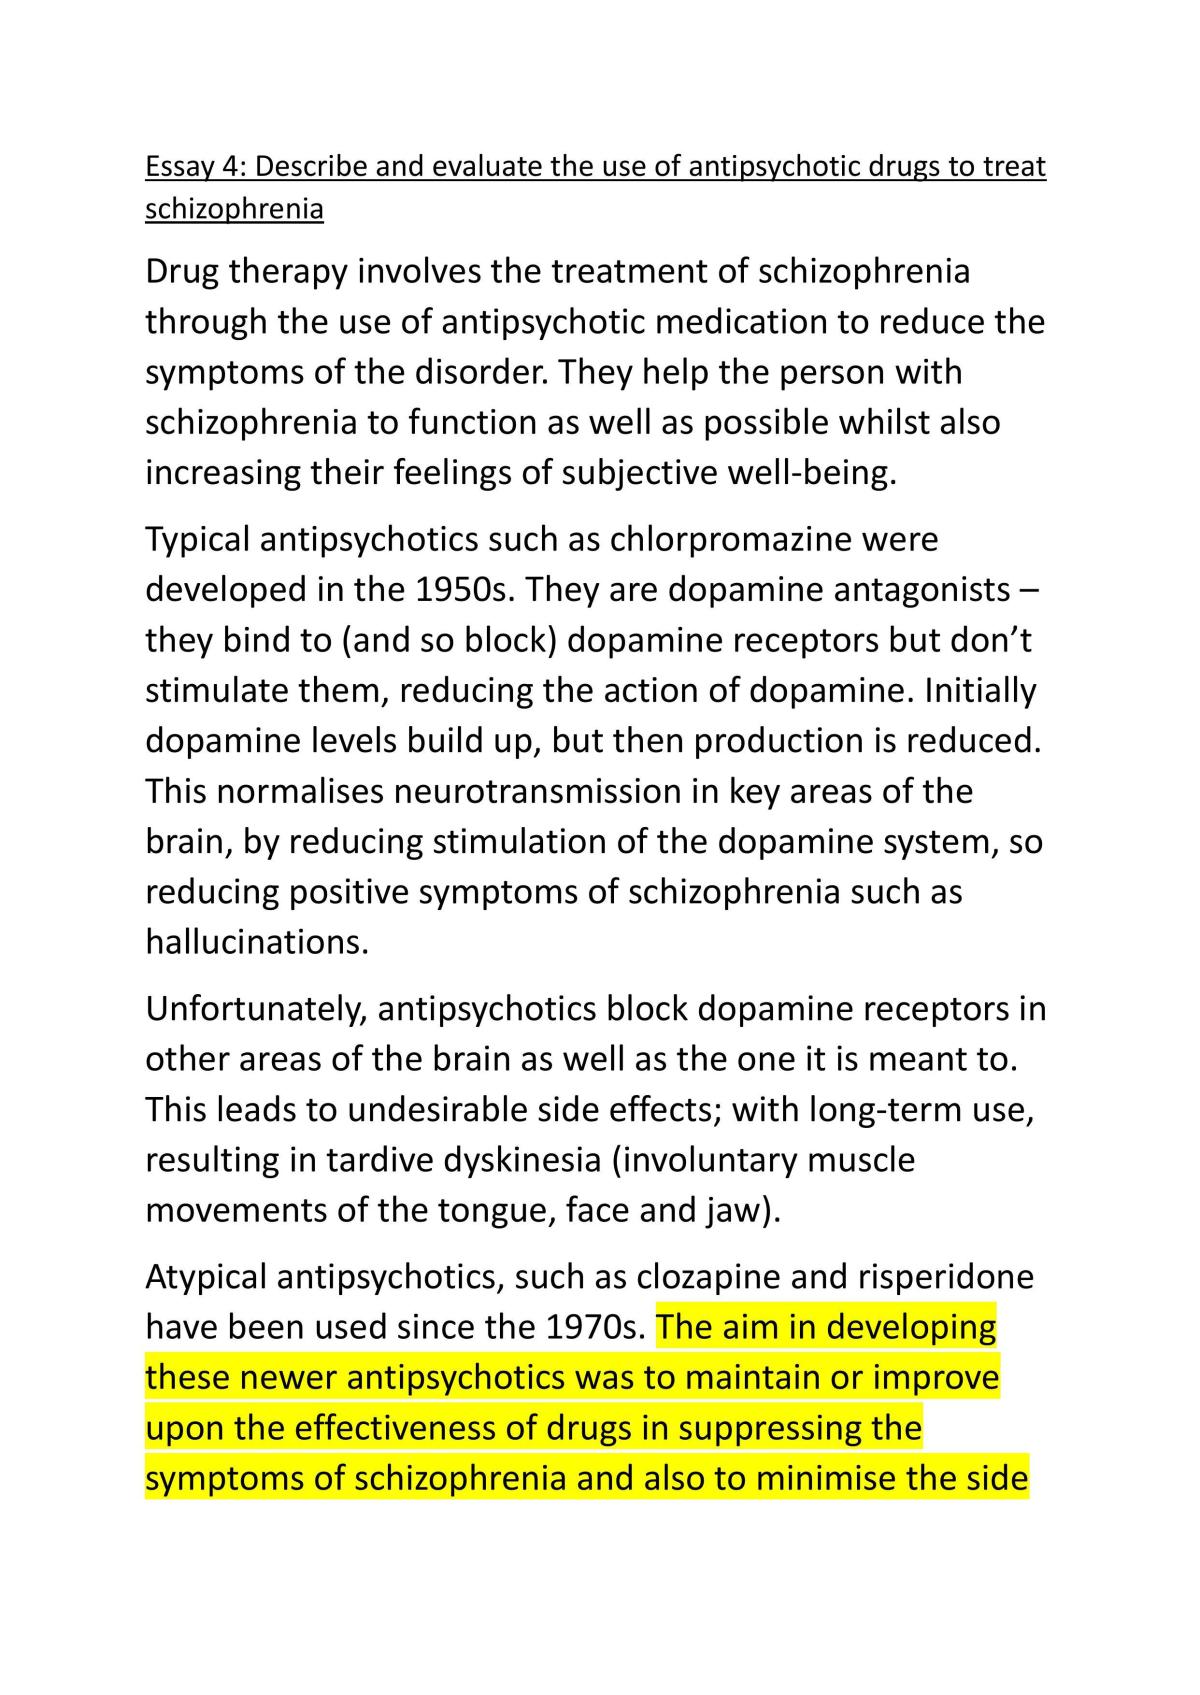 Schizophrenia Essay 4: Describe and evaluate the use of antipsychotics drugs to treat schizophrenia. - Page 1